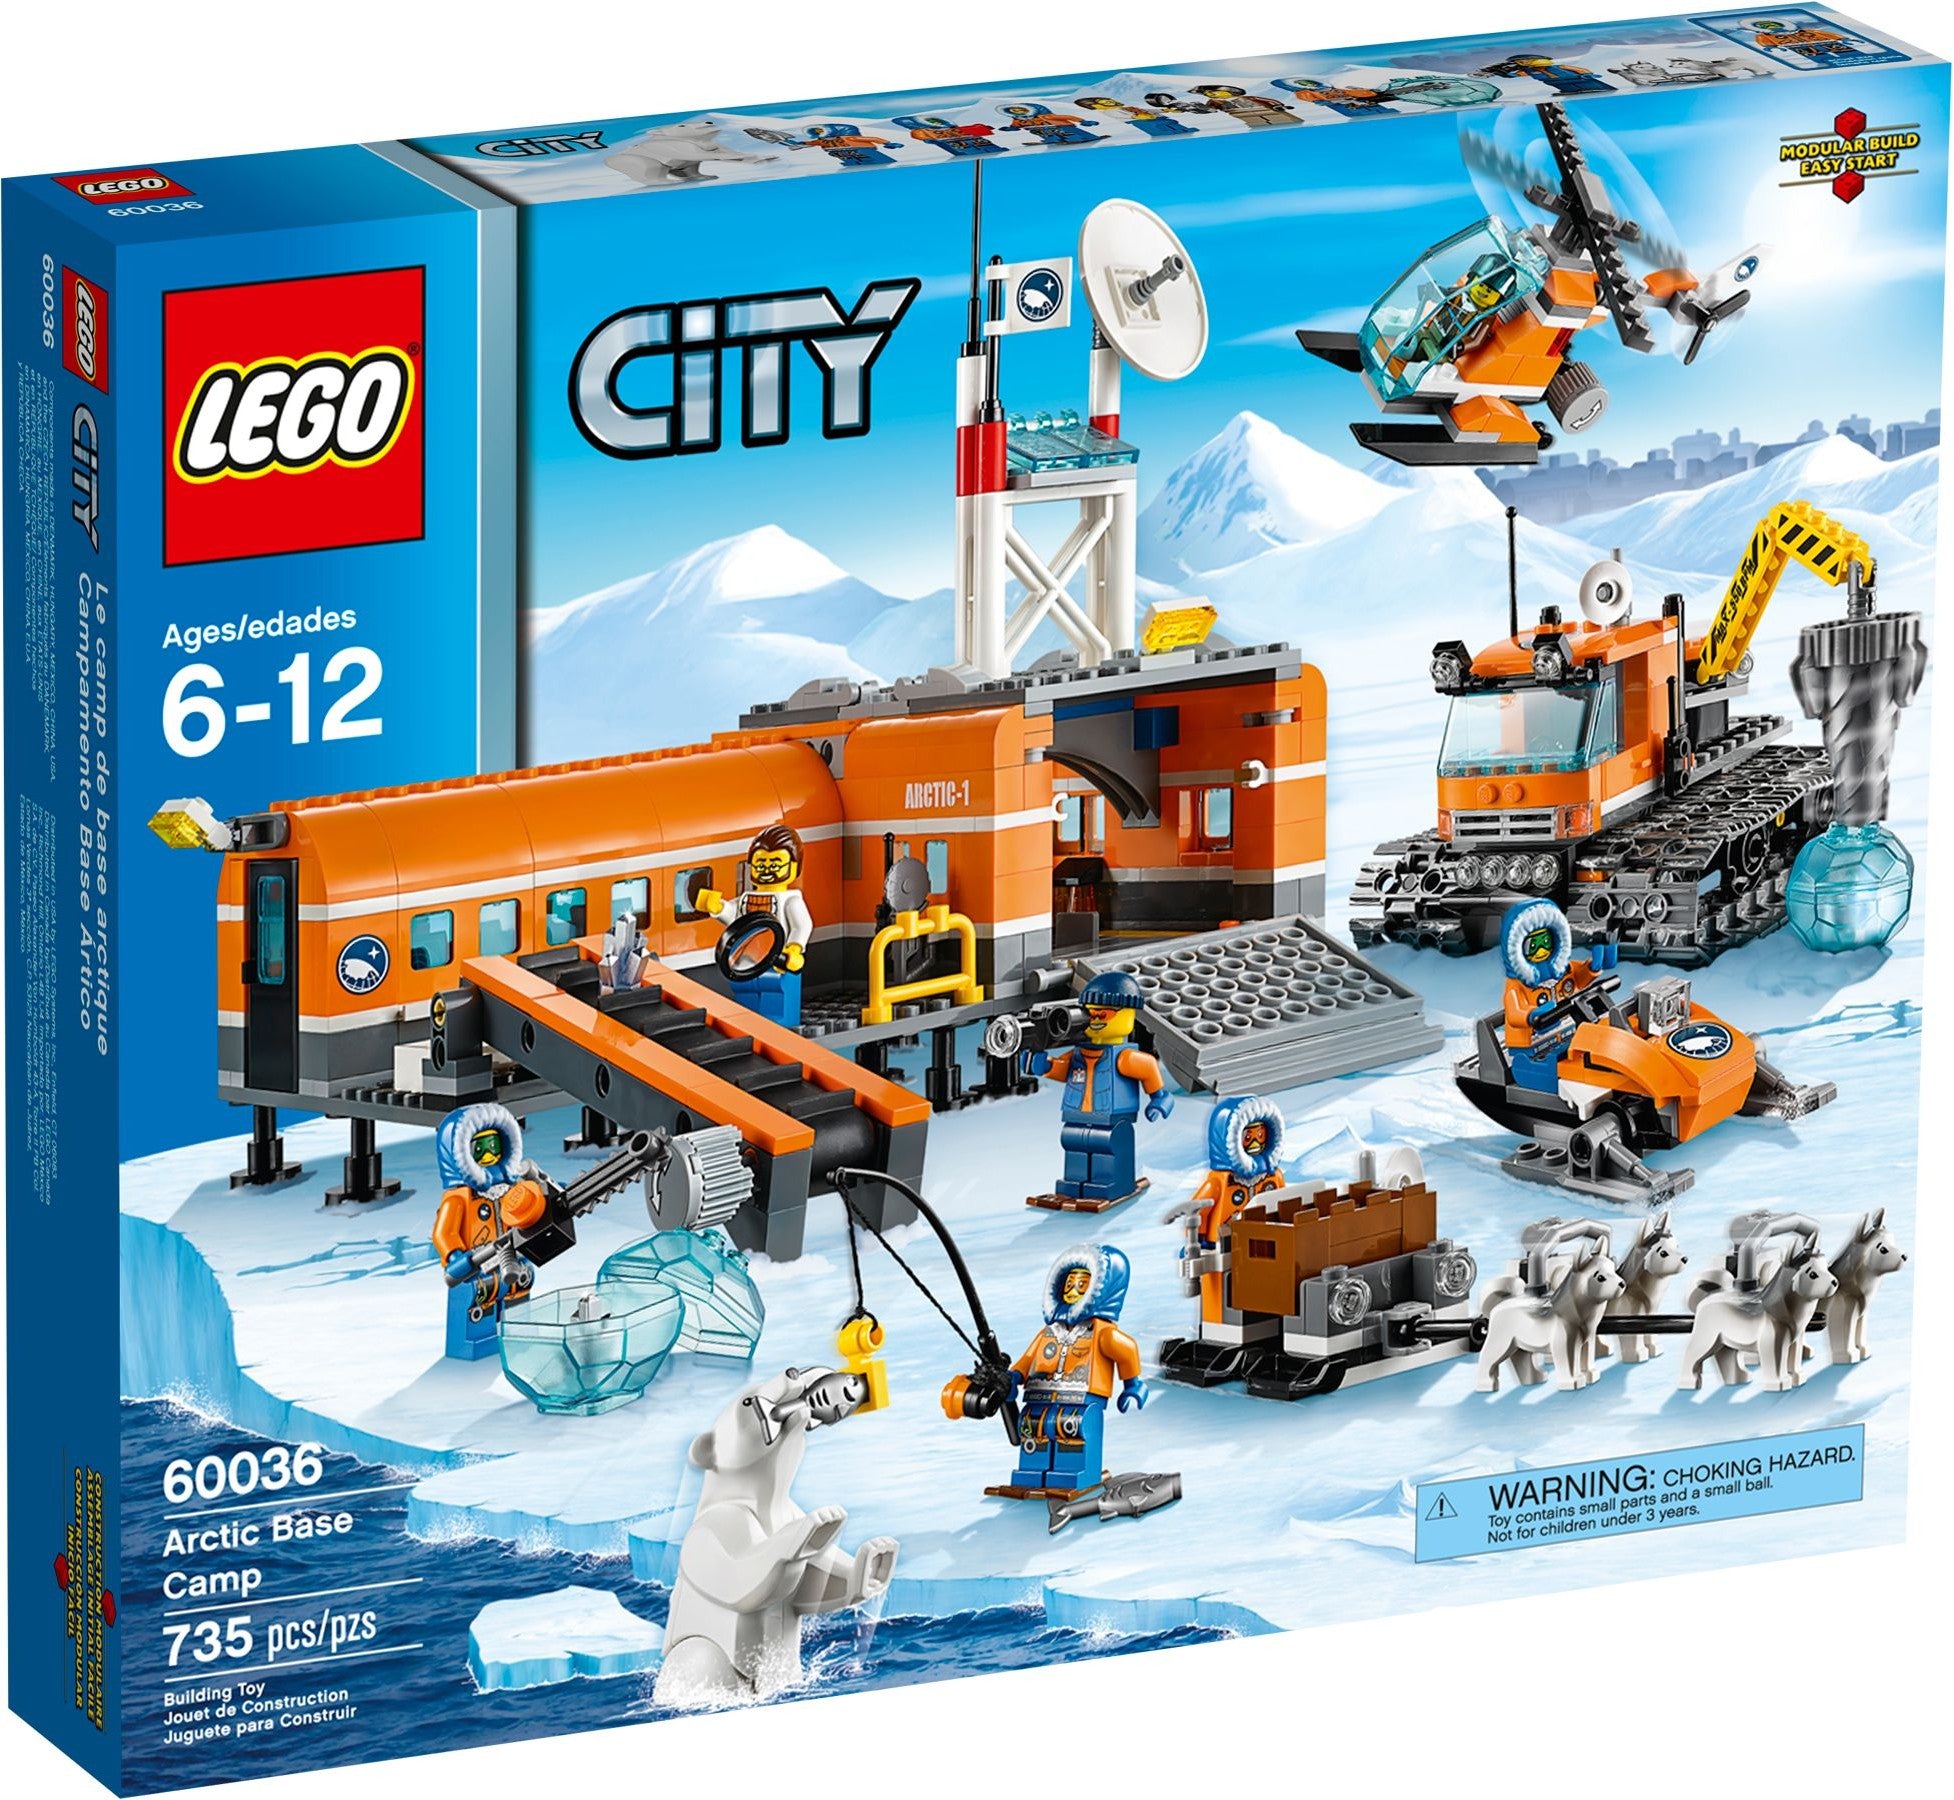 Lego City 60036 - Arctic Base Camp